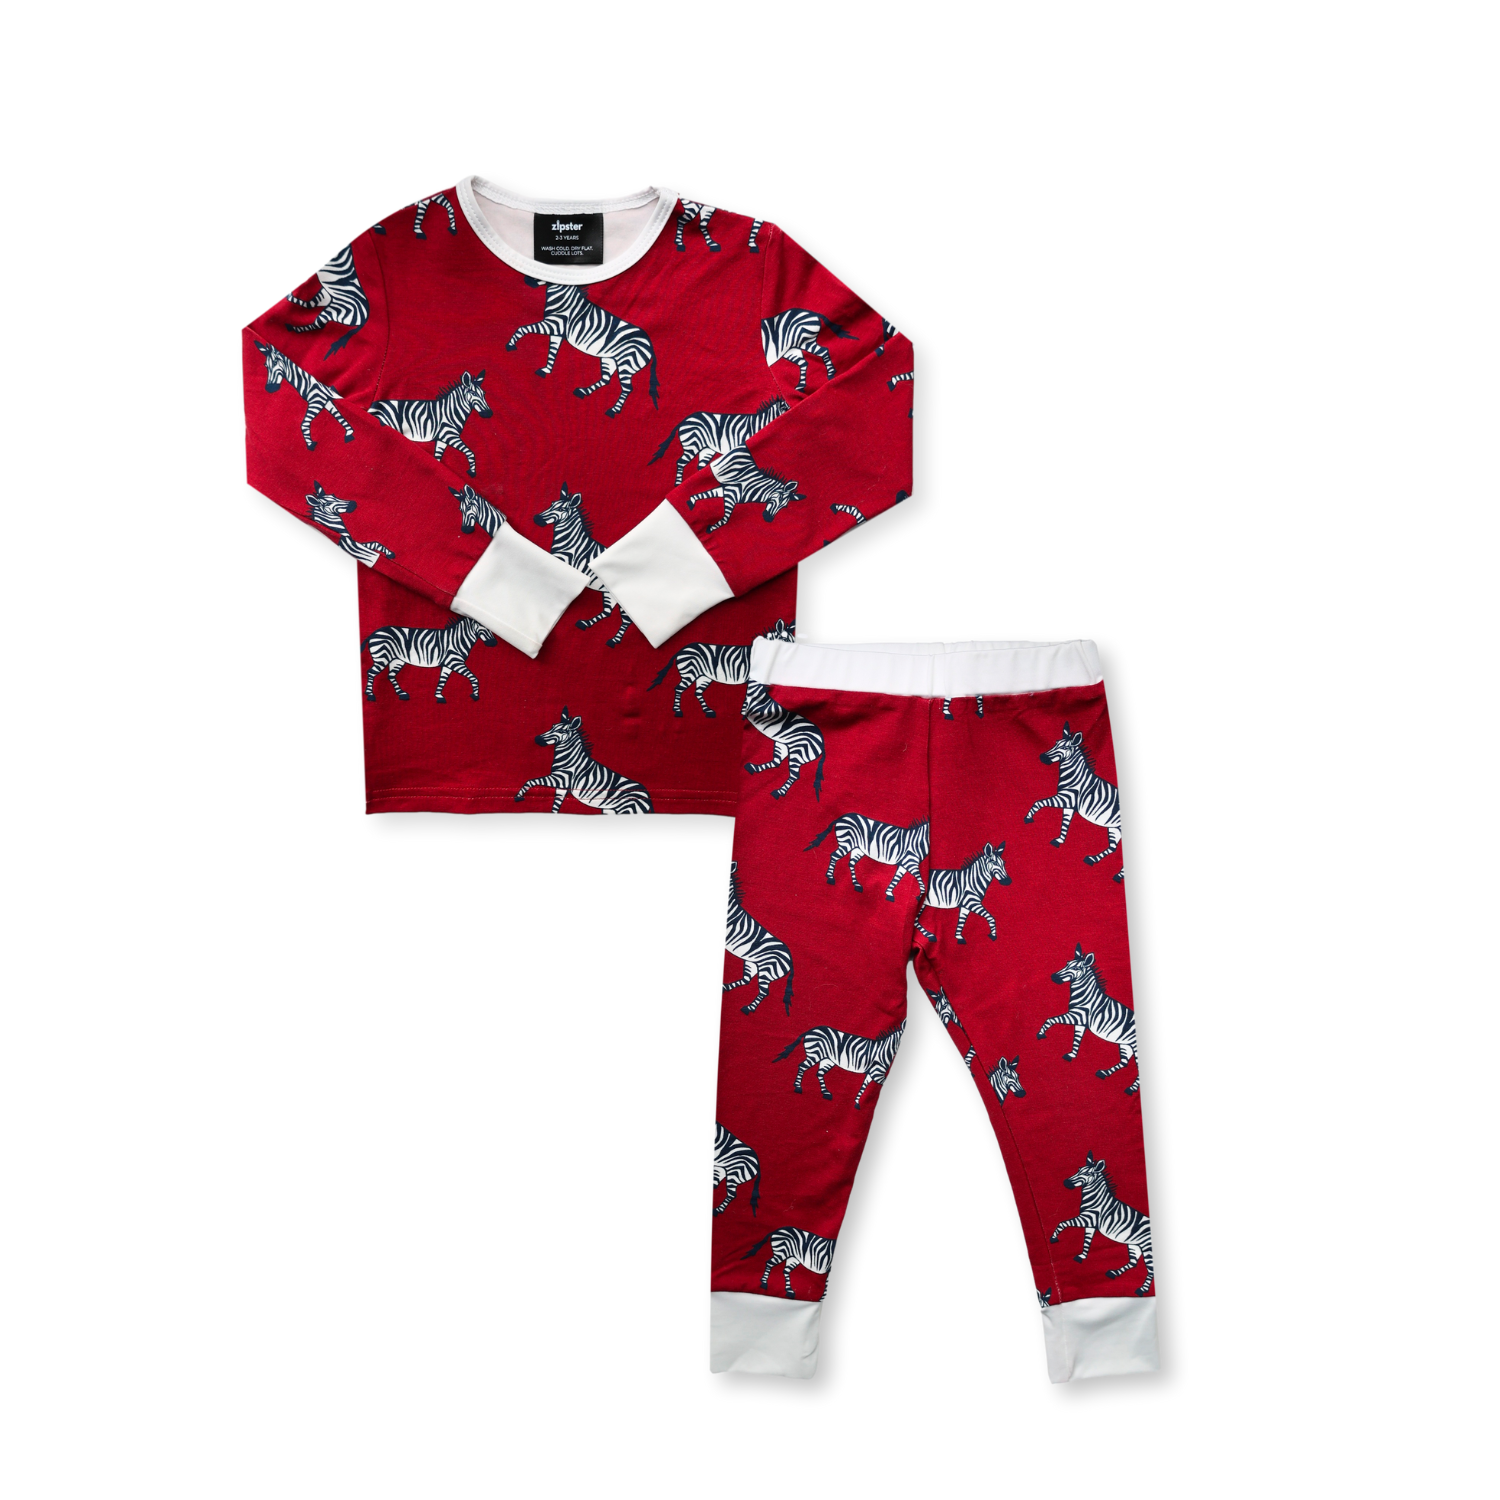 Ensemble de pyjamas pour enfants Burgundy Zebra